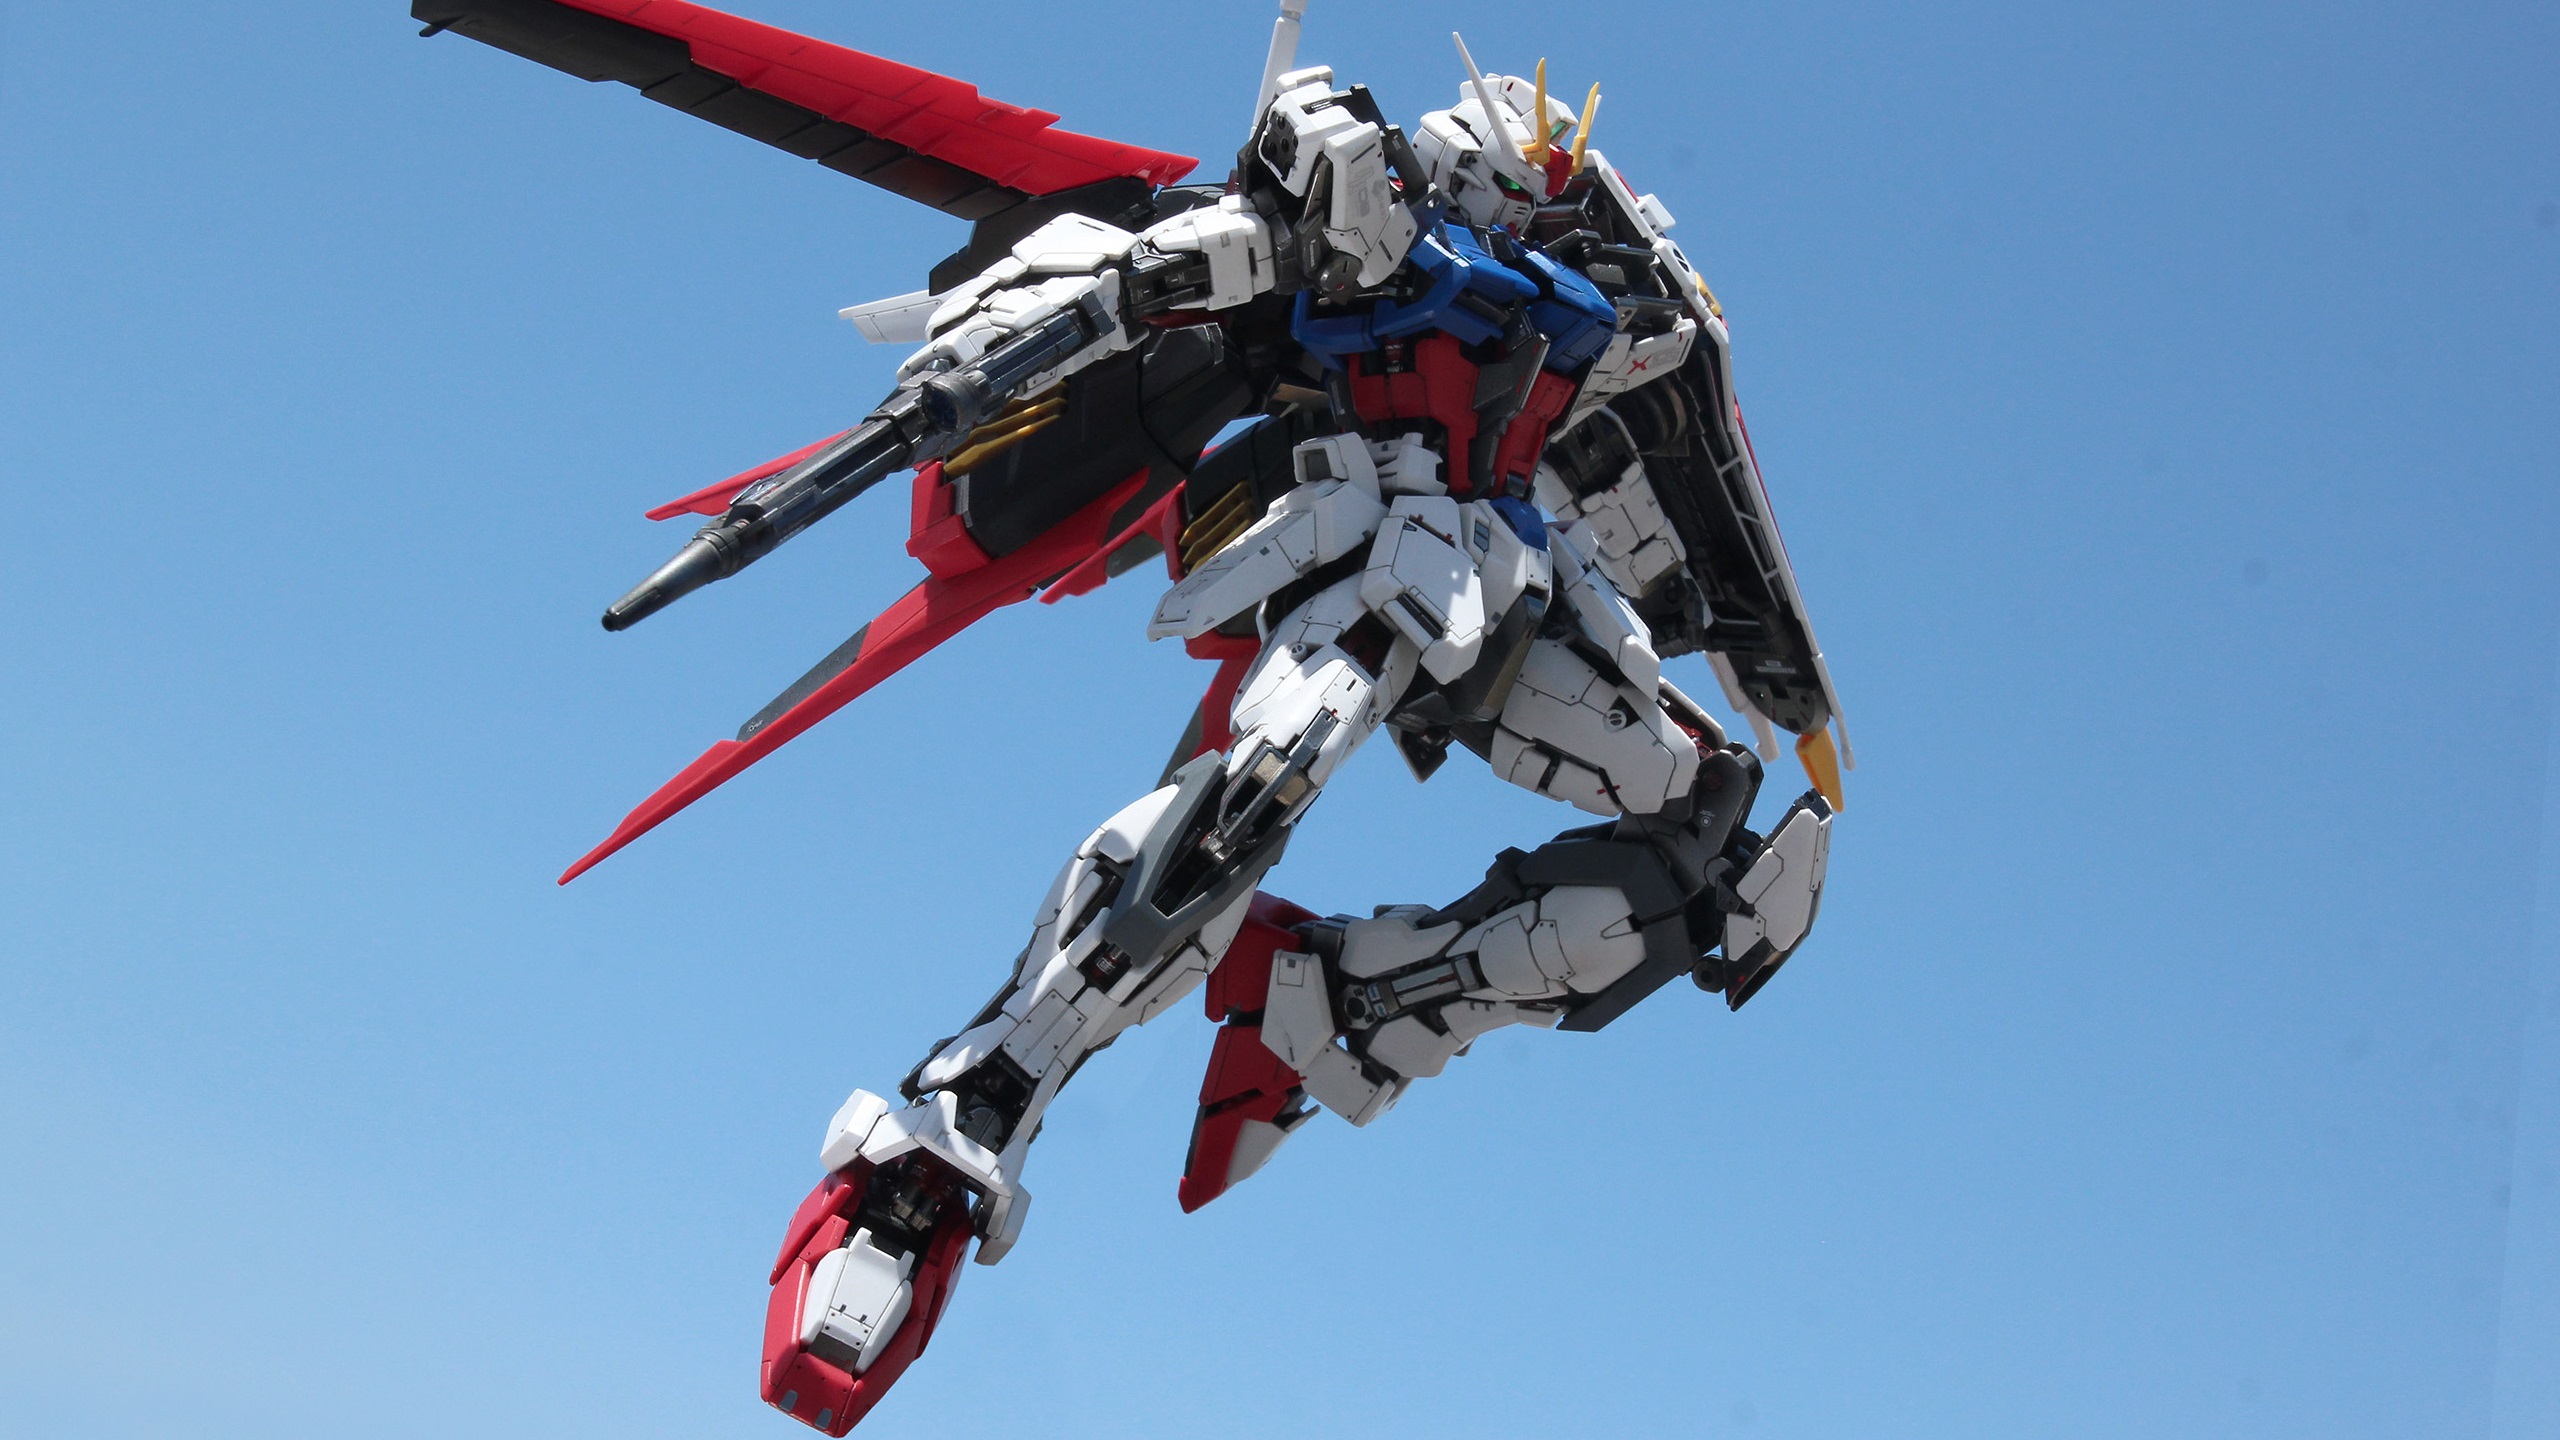 General 2560x1440 Mobile Suit Gundam Gundam Gundam Aile Strike Master Grade mechs Josh Darrah Gunpla Mobile Suit Gundam SEED robot science fiction